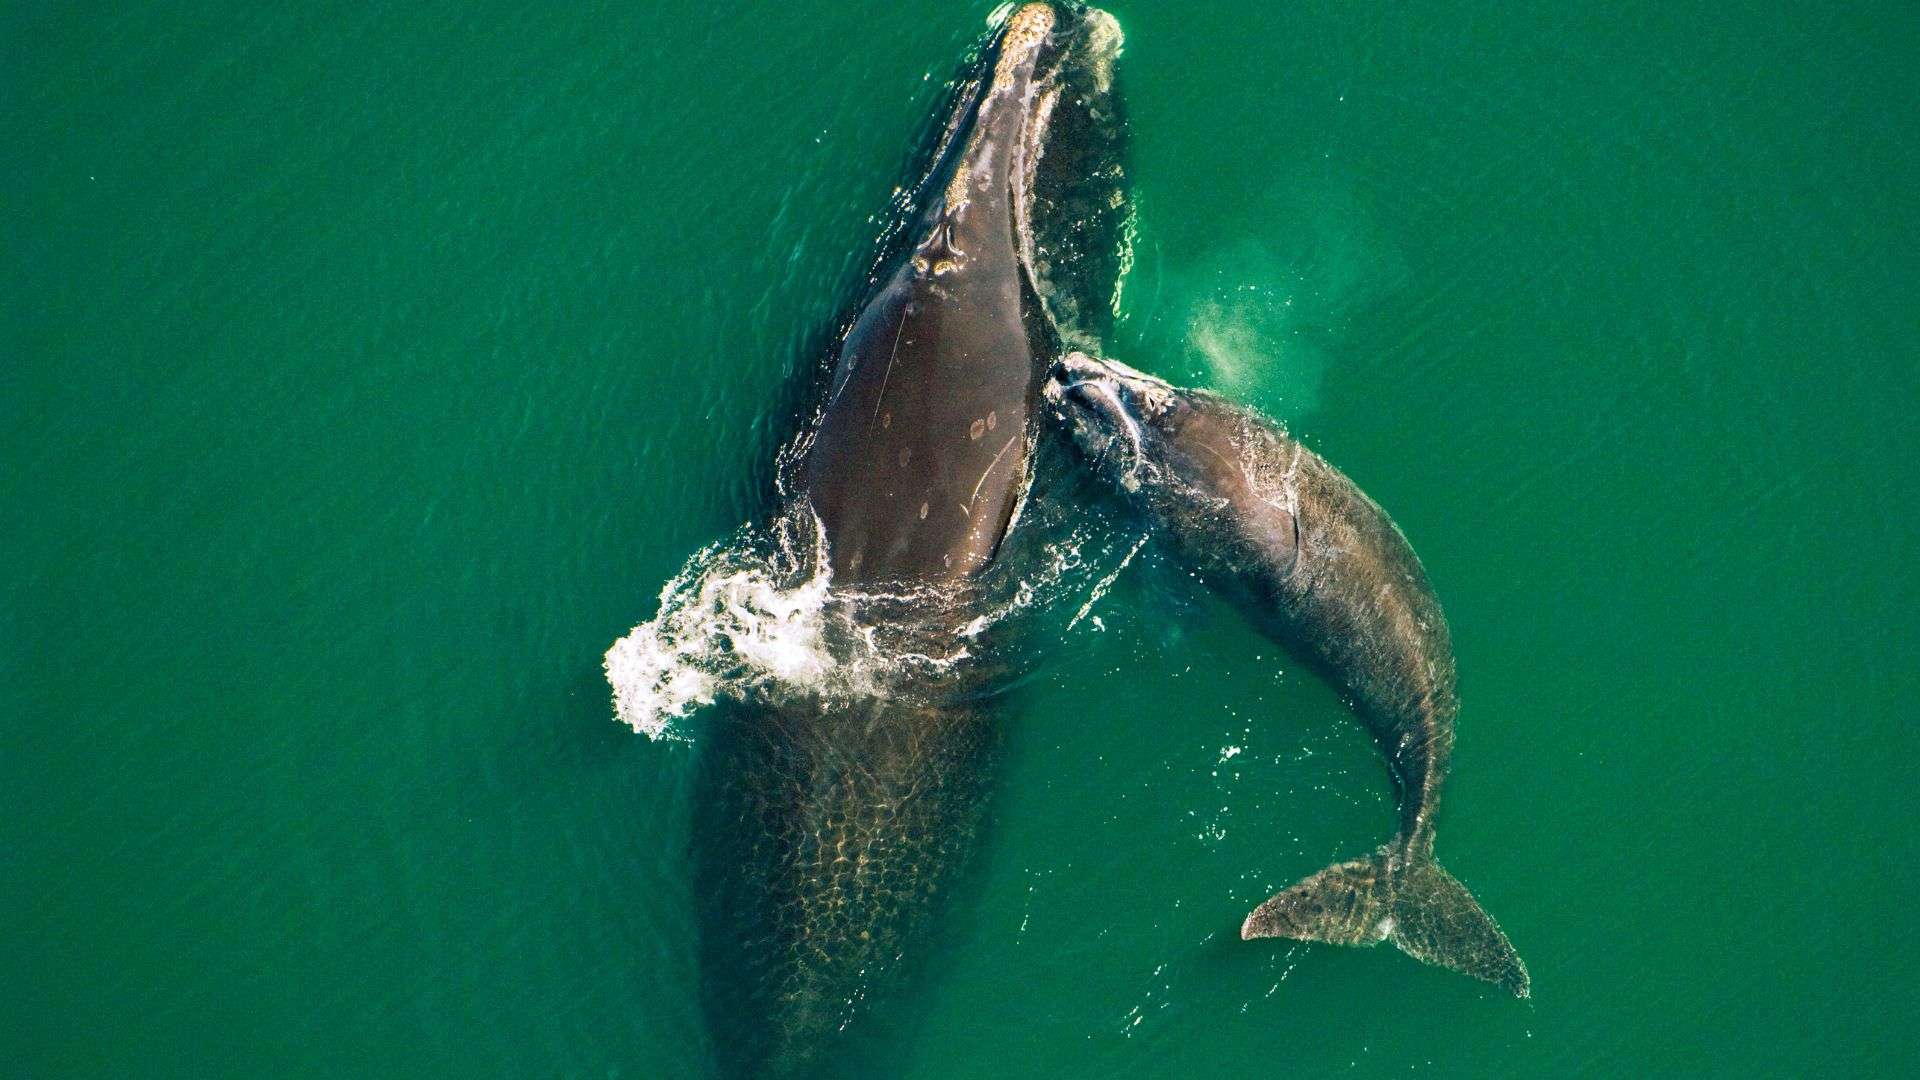 Northern right whale mother & calf (Eubalaena glacialis) off the Atlantic coast of Florida.